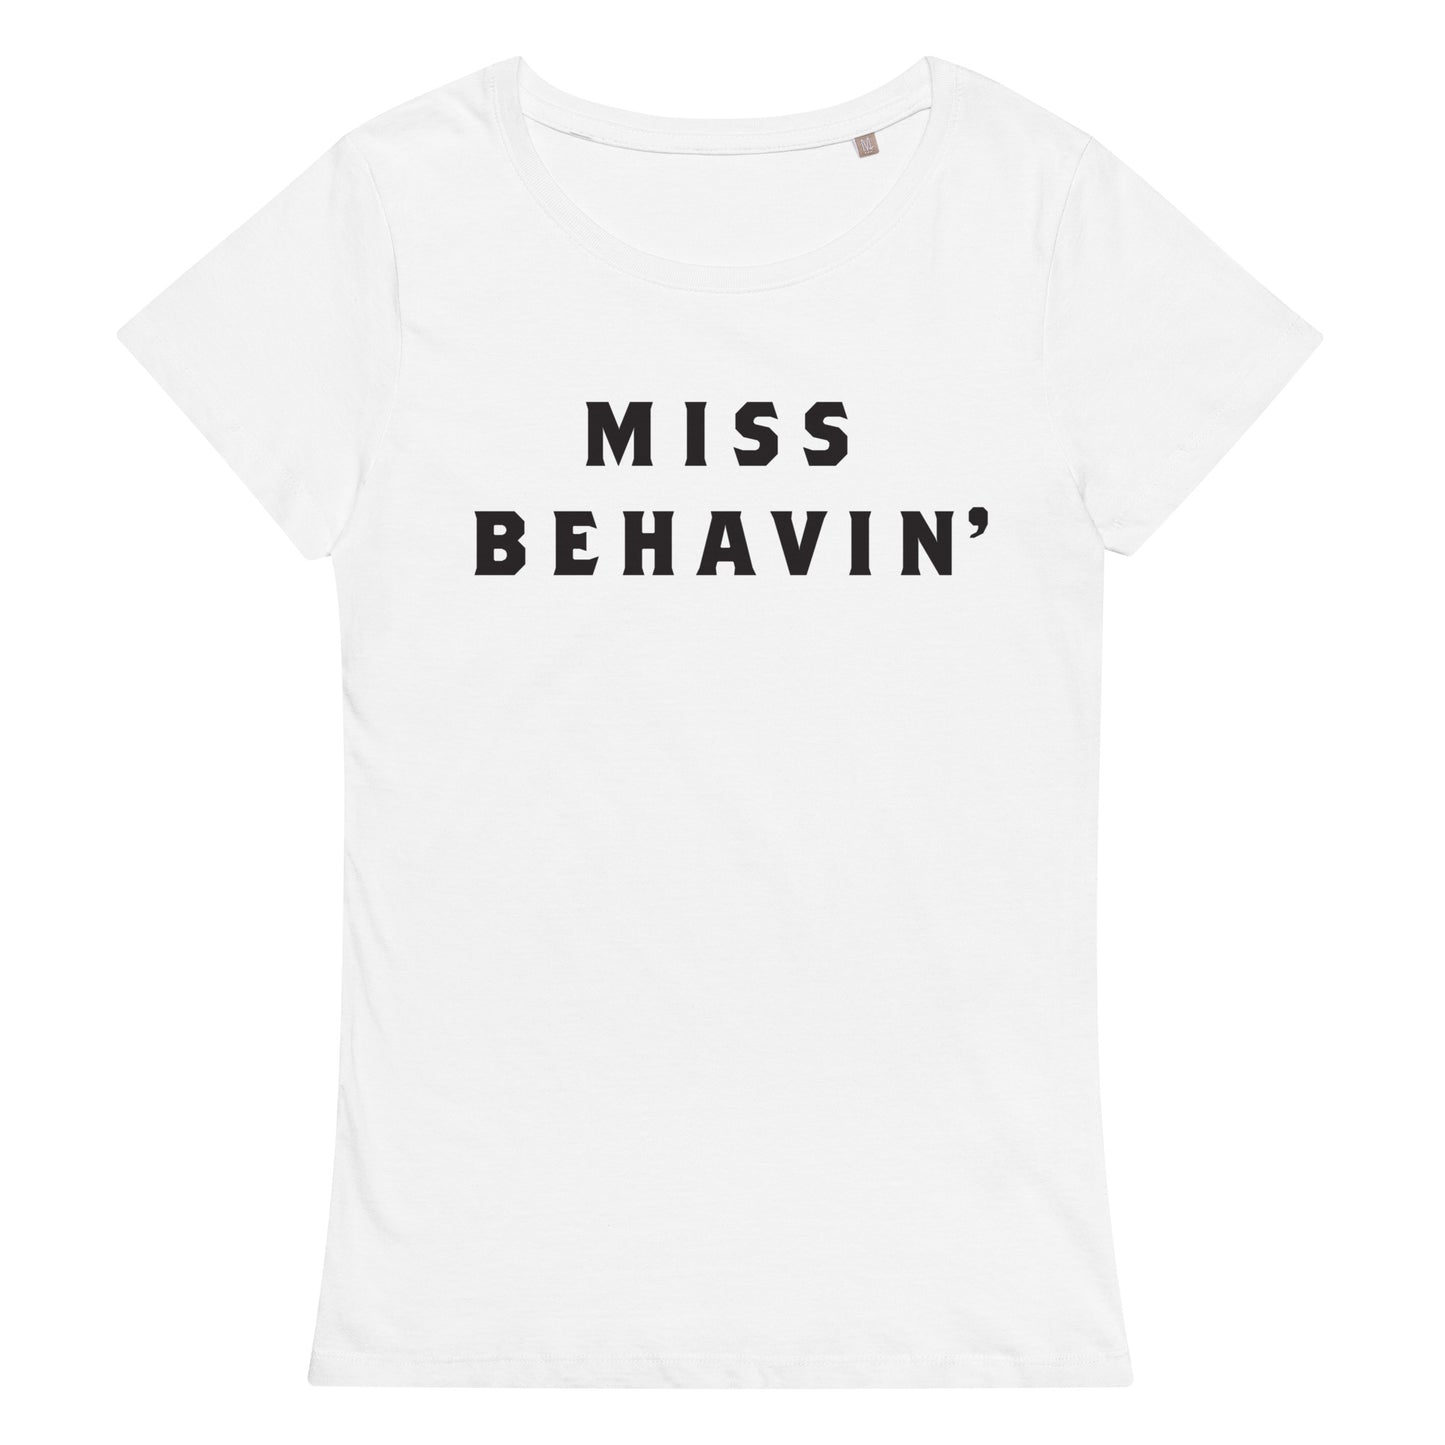 #MissBehavin' - Women’s Organic T-shirt